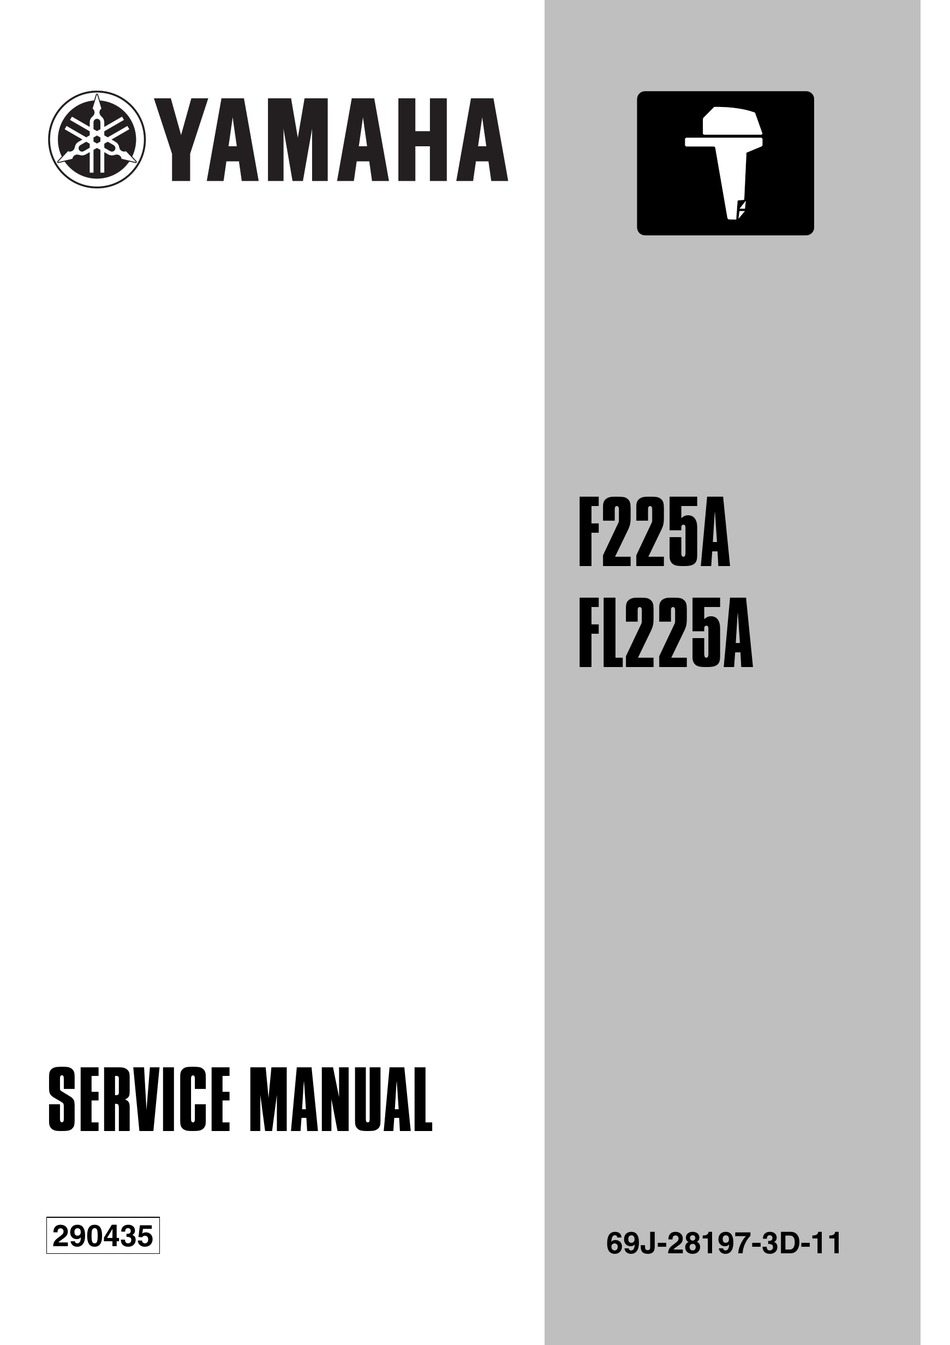 Yamaha F225a Service Manual Pdf